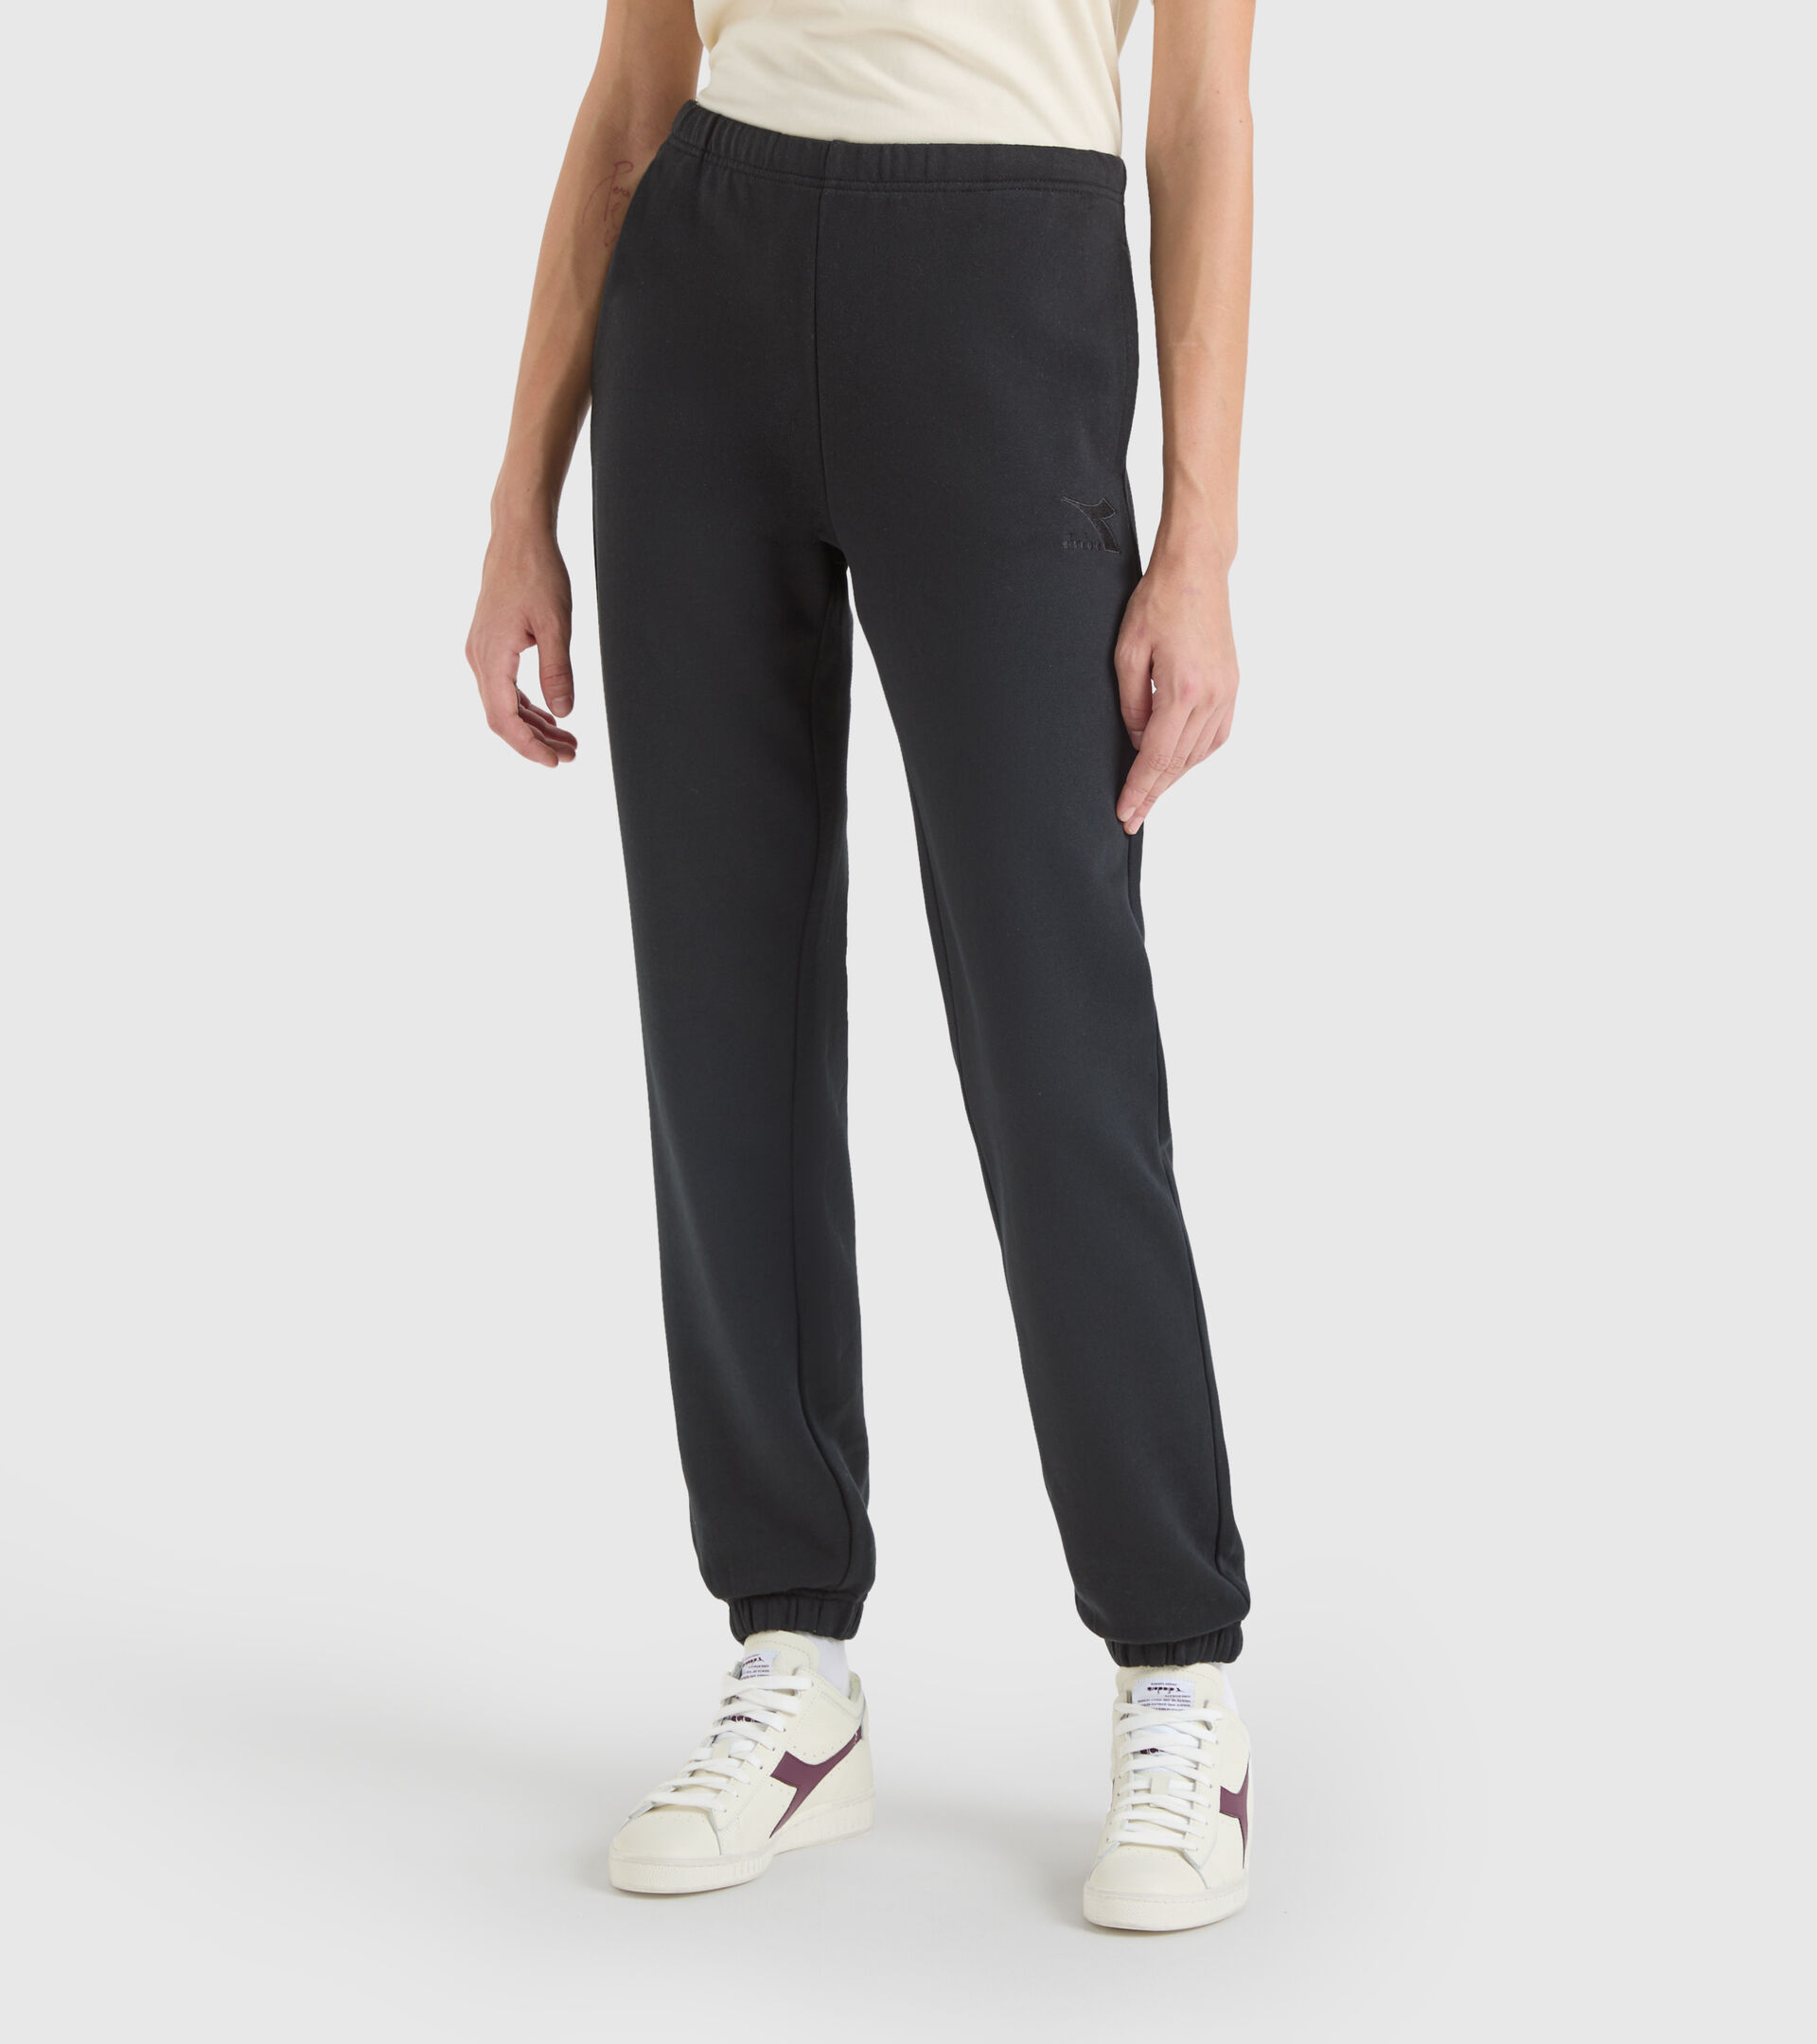 L.PANTS CUFF CORE Sports trousers - Women - Diadora Online Store CA